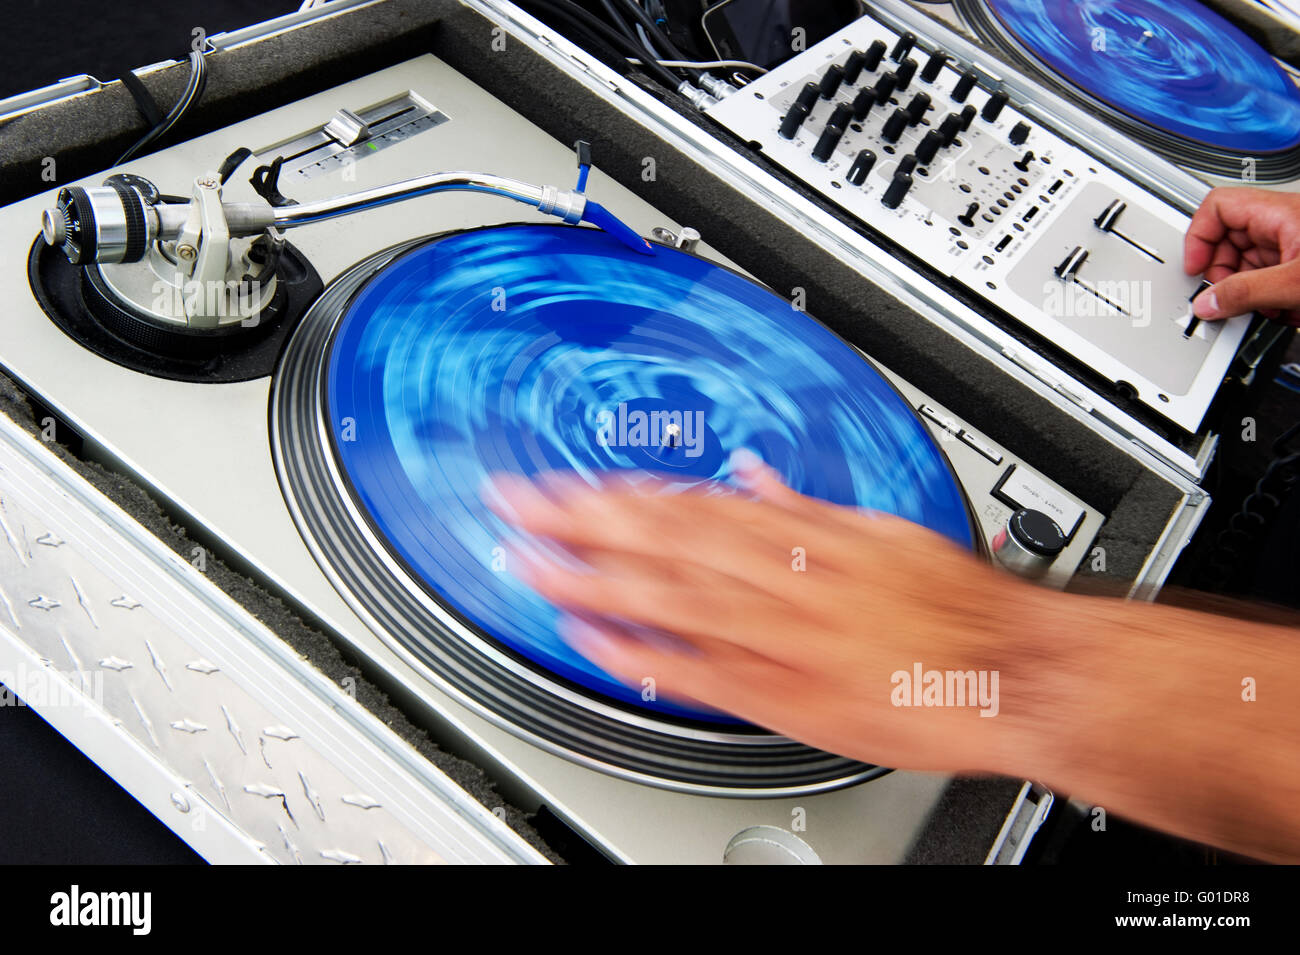 DJ spinning records Stock Photo